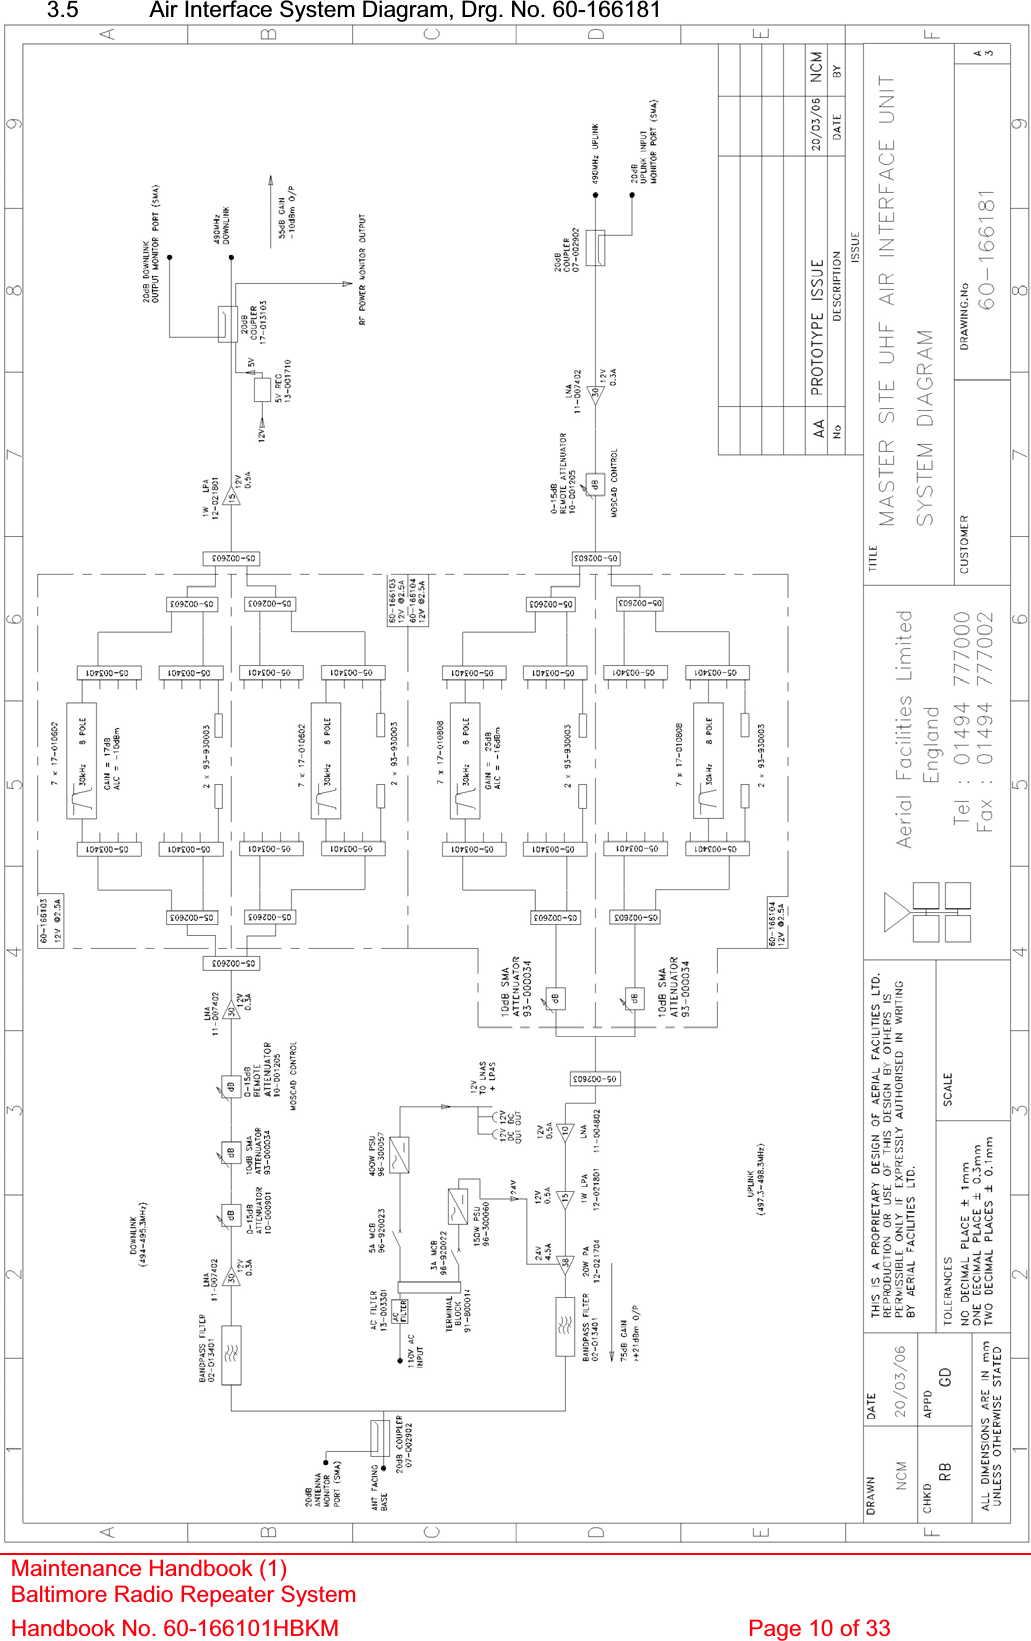 3.5  Air Interface System Diagram, Drg. No. 60-166181 Maintenance Handbook (1) Baltimore Radio Repeater System Handbook No. 60-166101HBKM  Page 10 of 33 